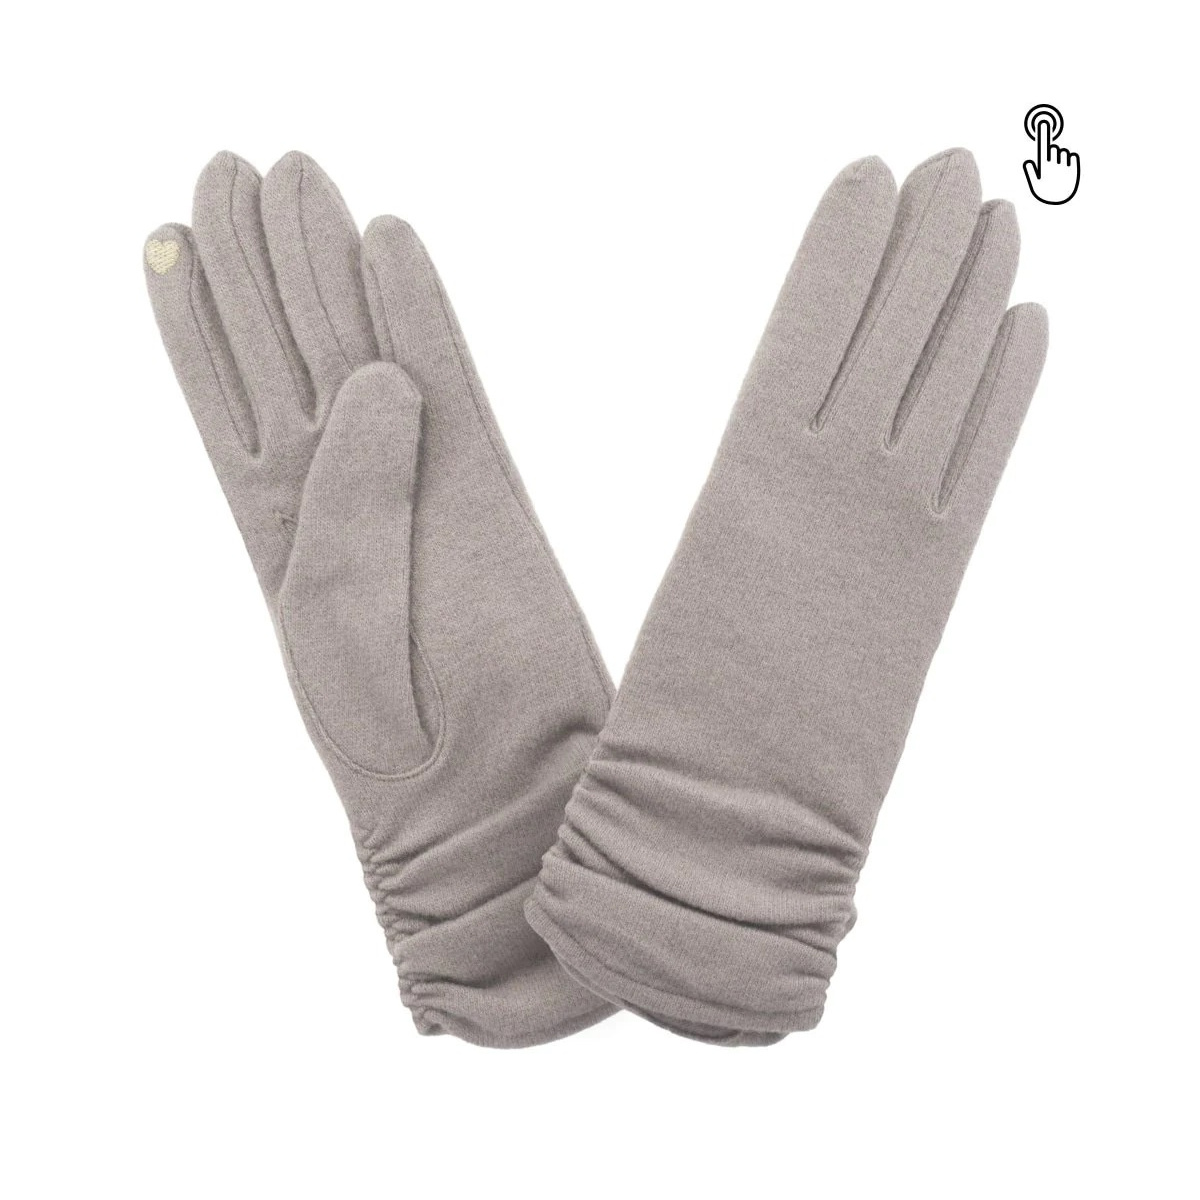 Gants Femme Nina Tactile Taupe - Glove Story Reference : 18650